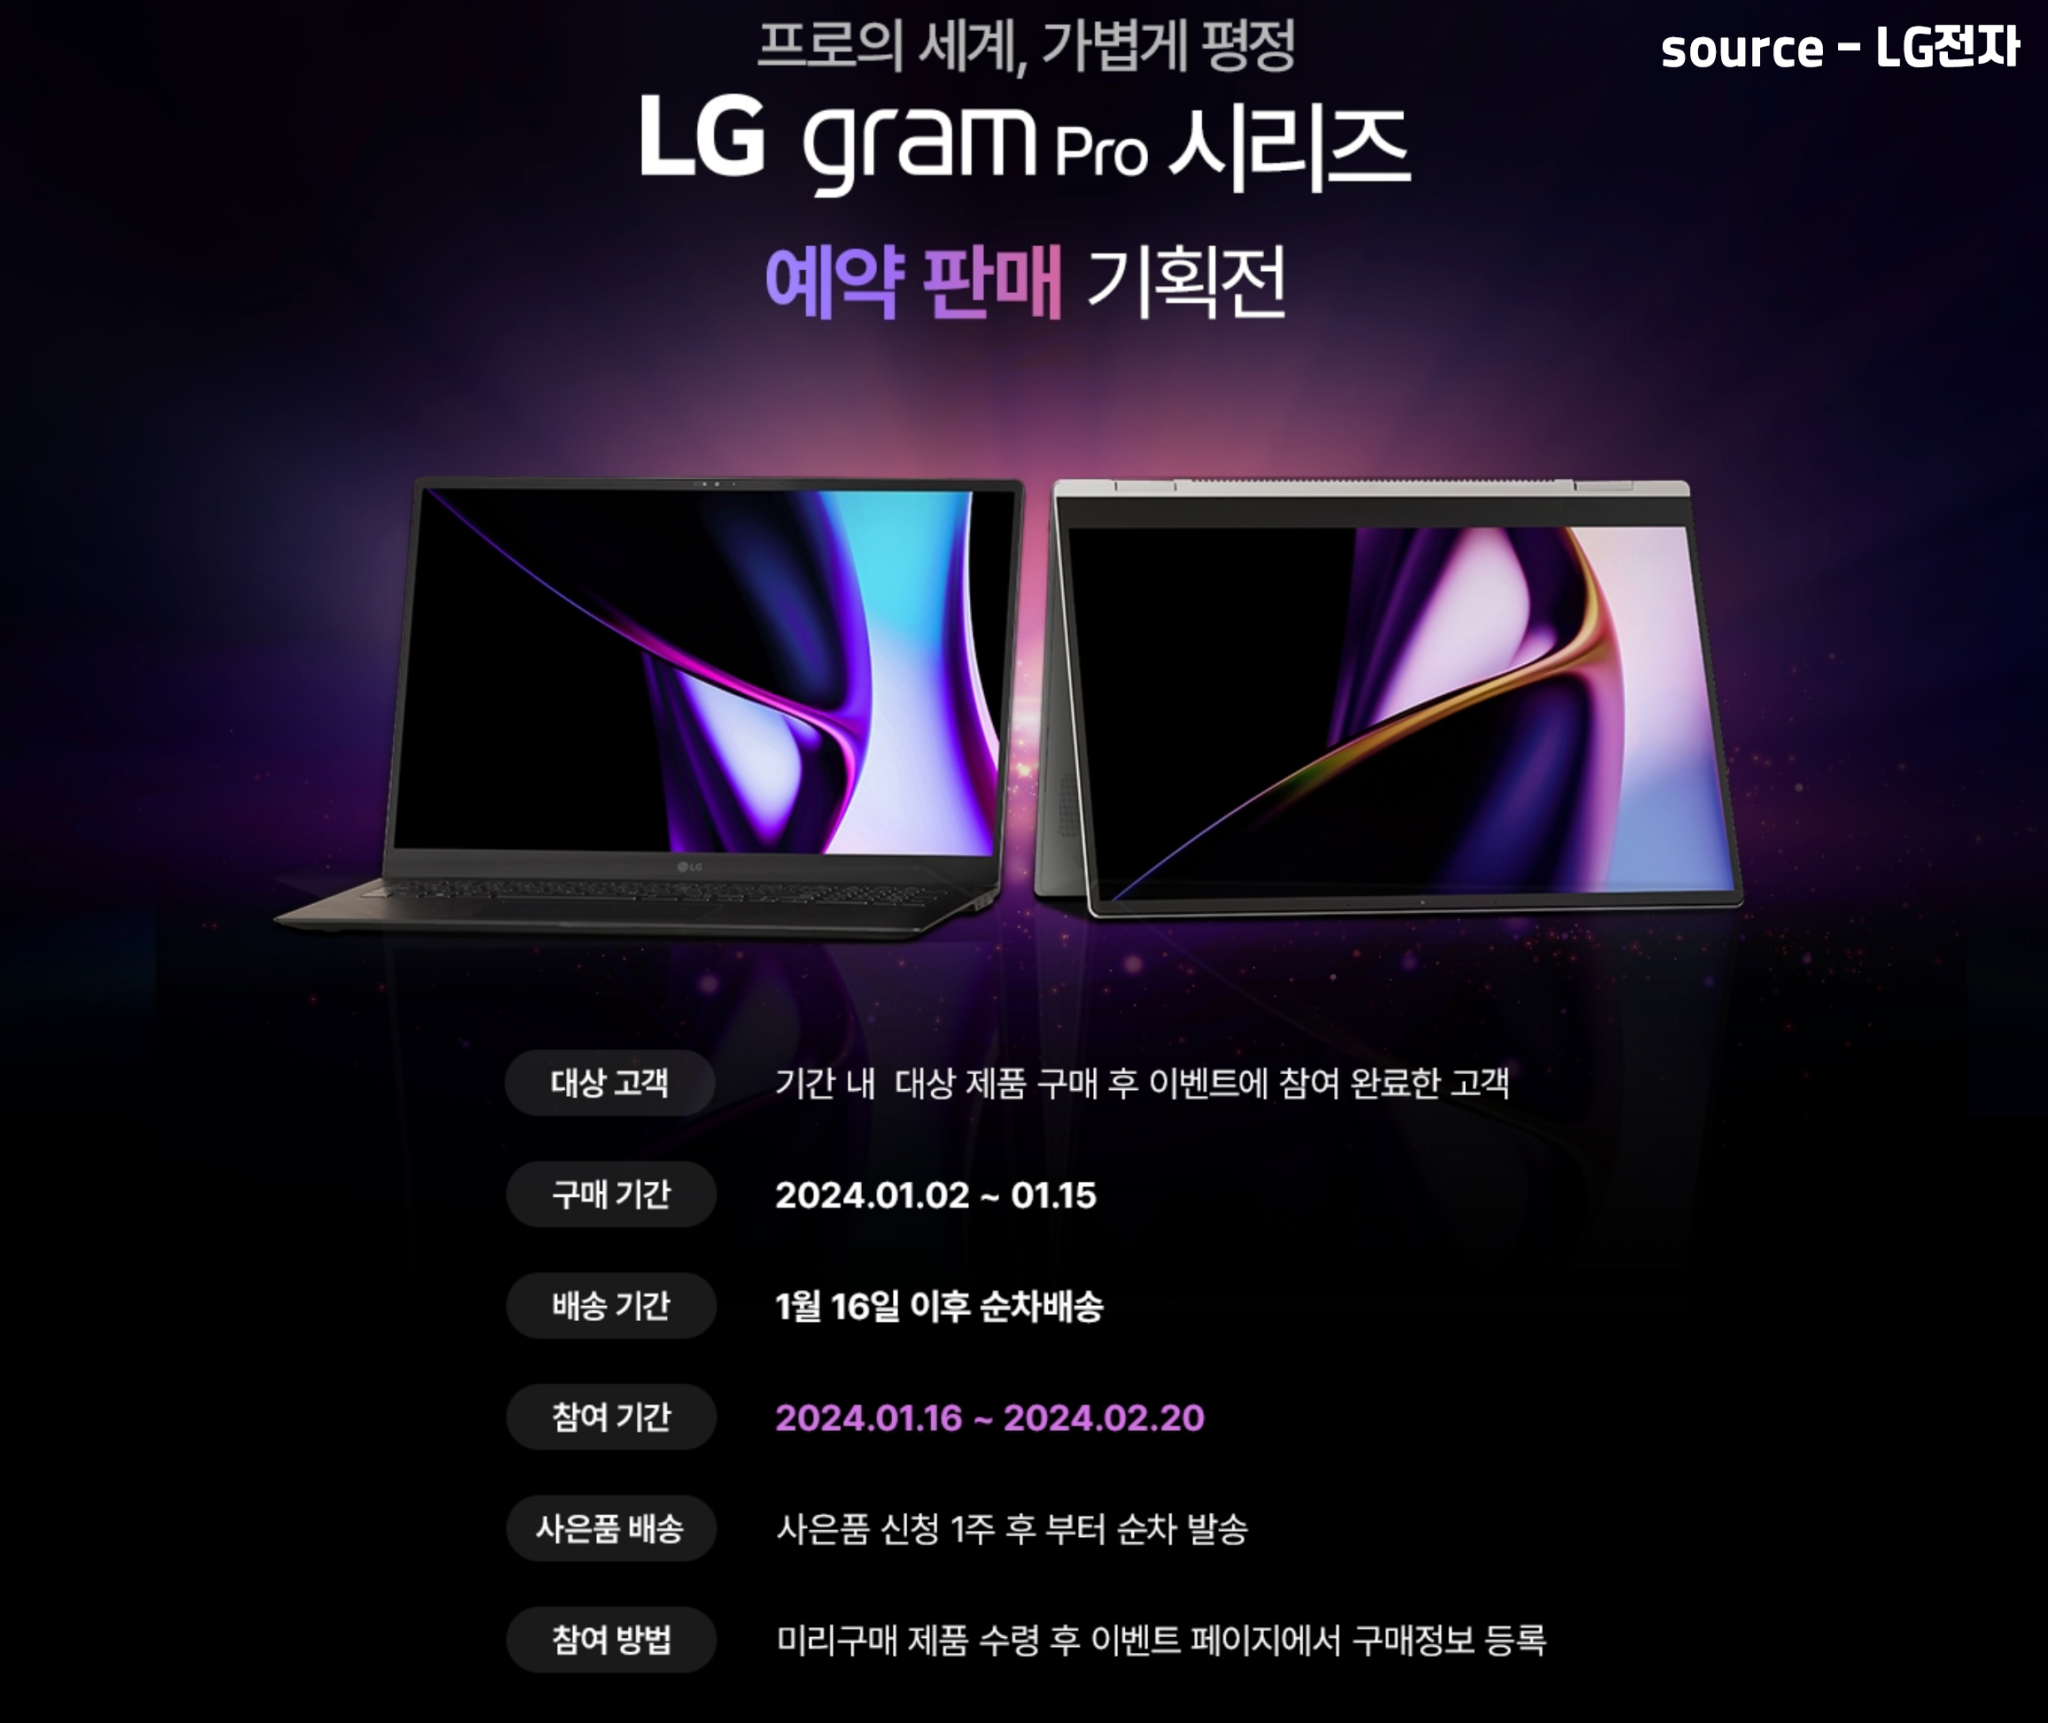 LG 그램 프로 사전예약 혜택